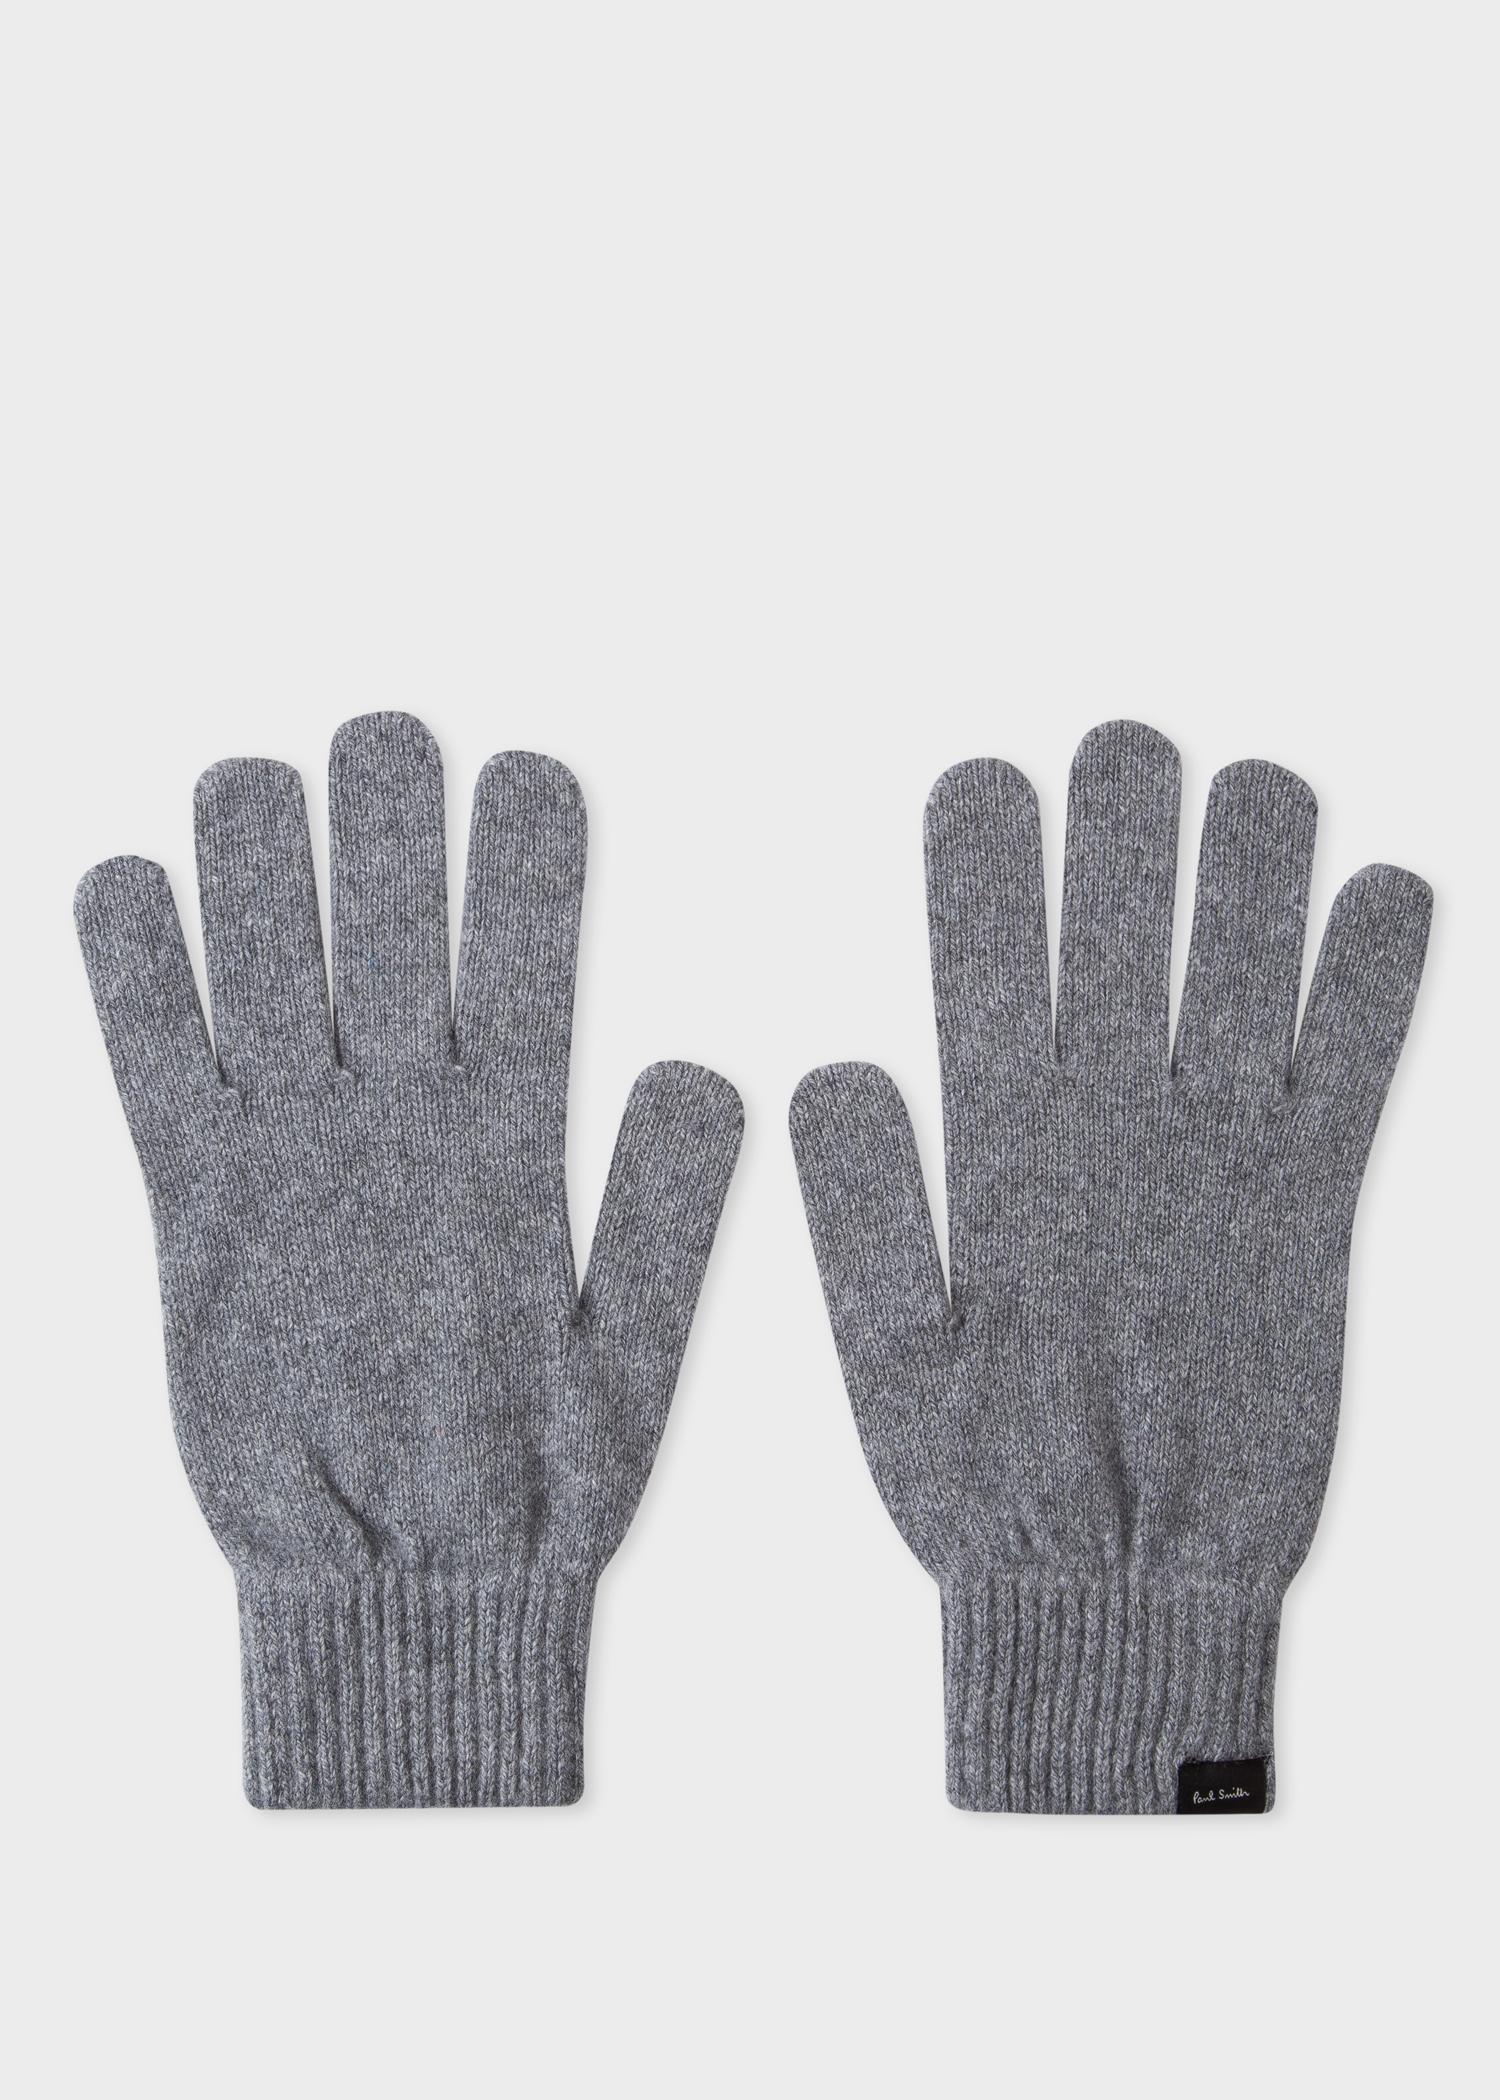 NIce Caps Mens Merino Wool Touchscreen Gloves